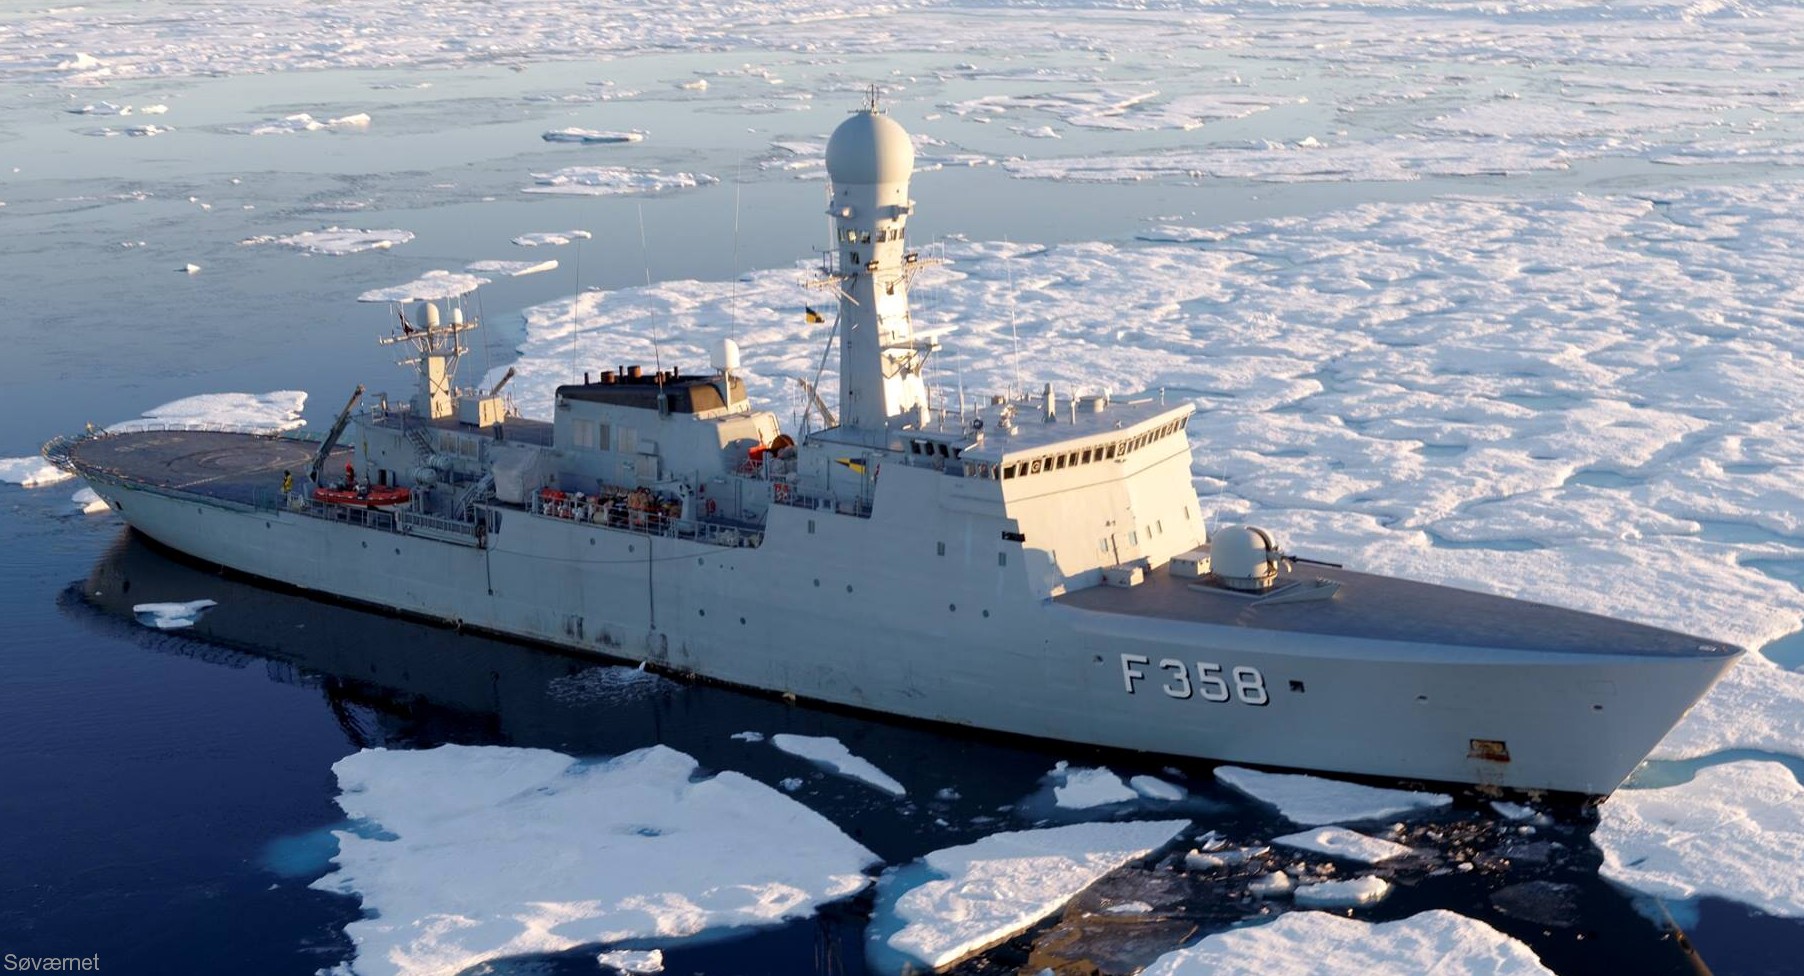 f-358 hdms triton thetis class ocean patrol frigate royal danish navy kongelige danske marine kdm inspektionsskibet 39 pack floating ice